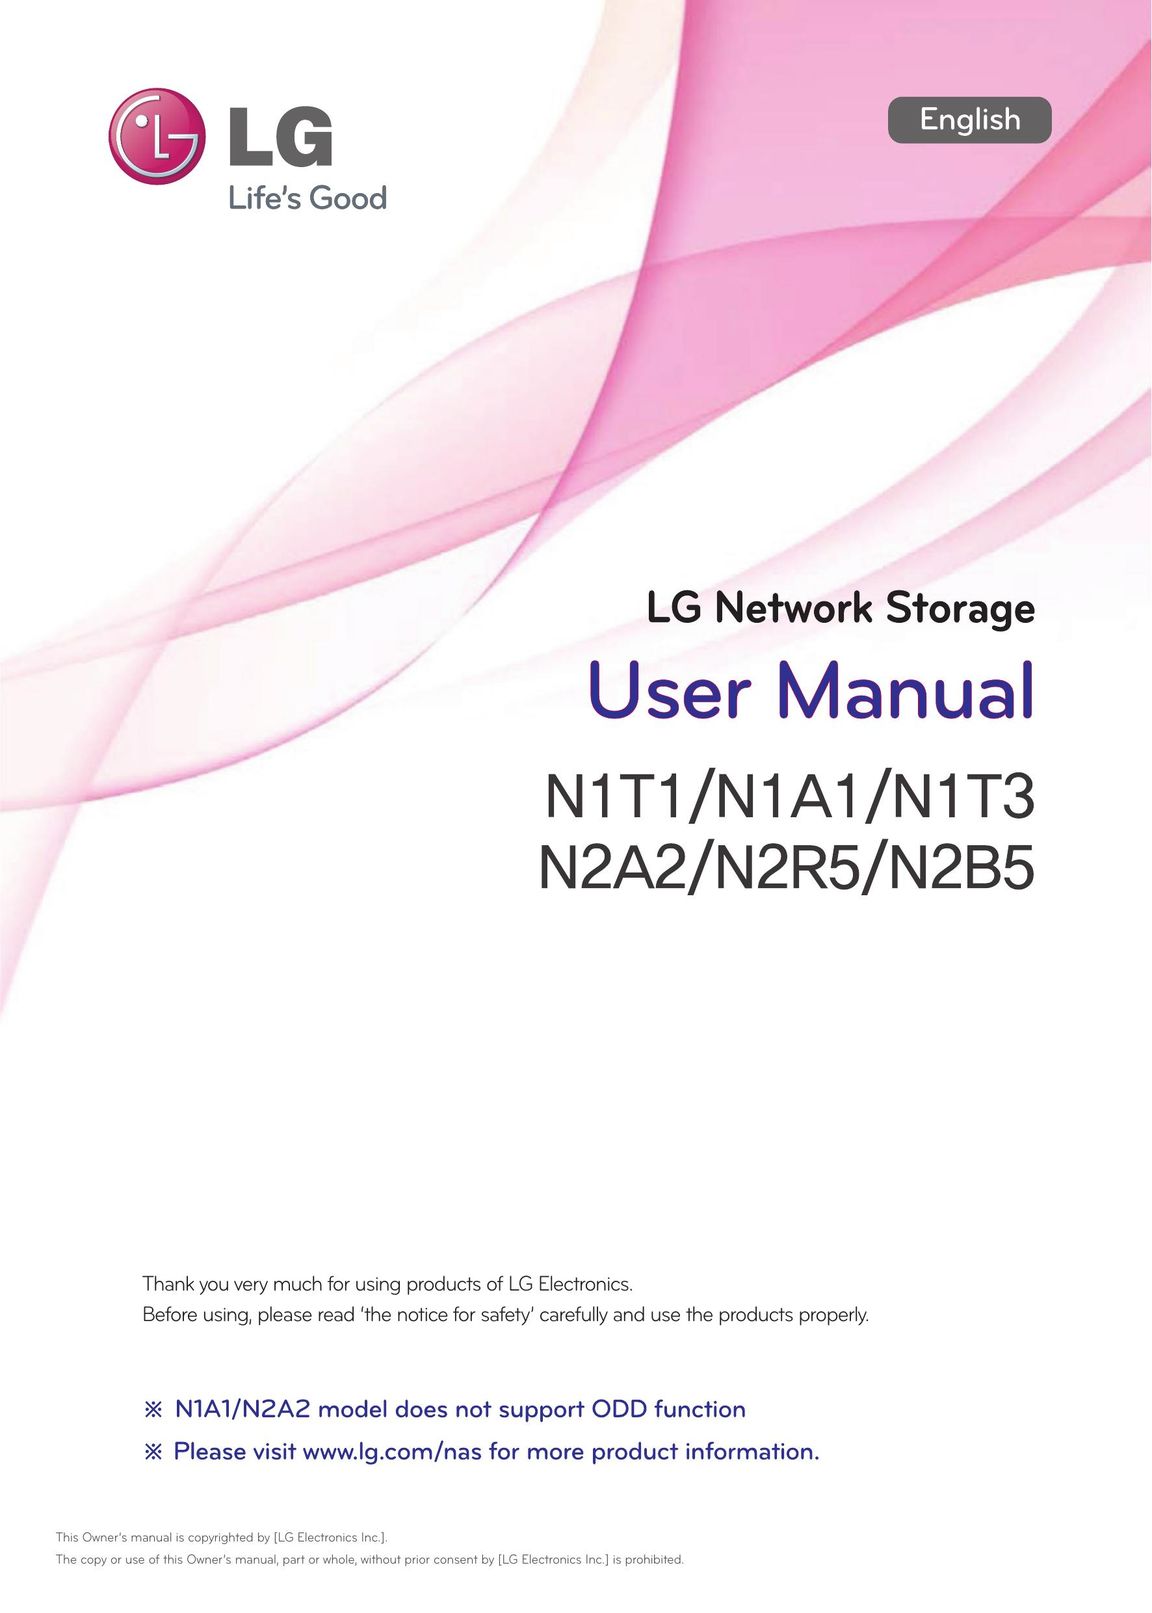 LG Electronics N1T1 Network Hardware User Manual